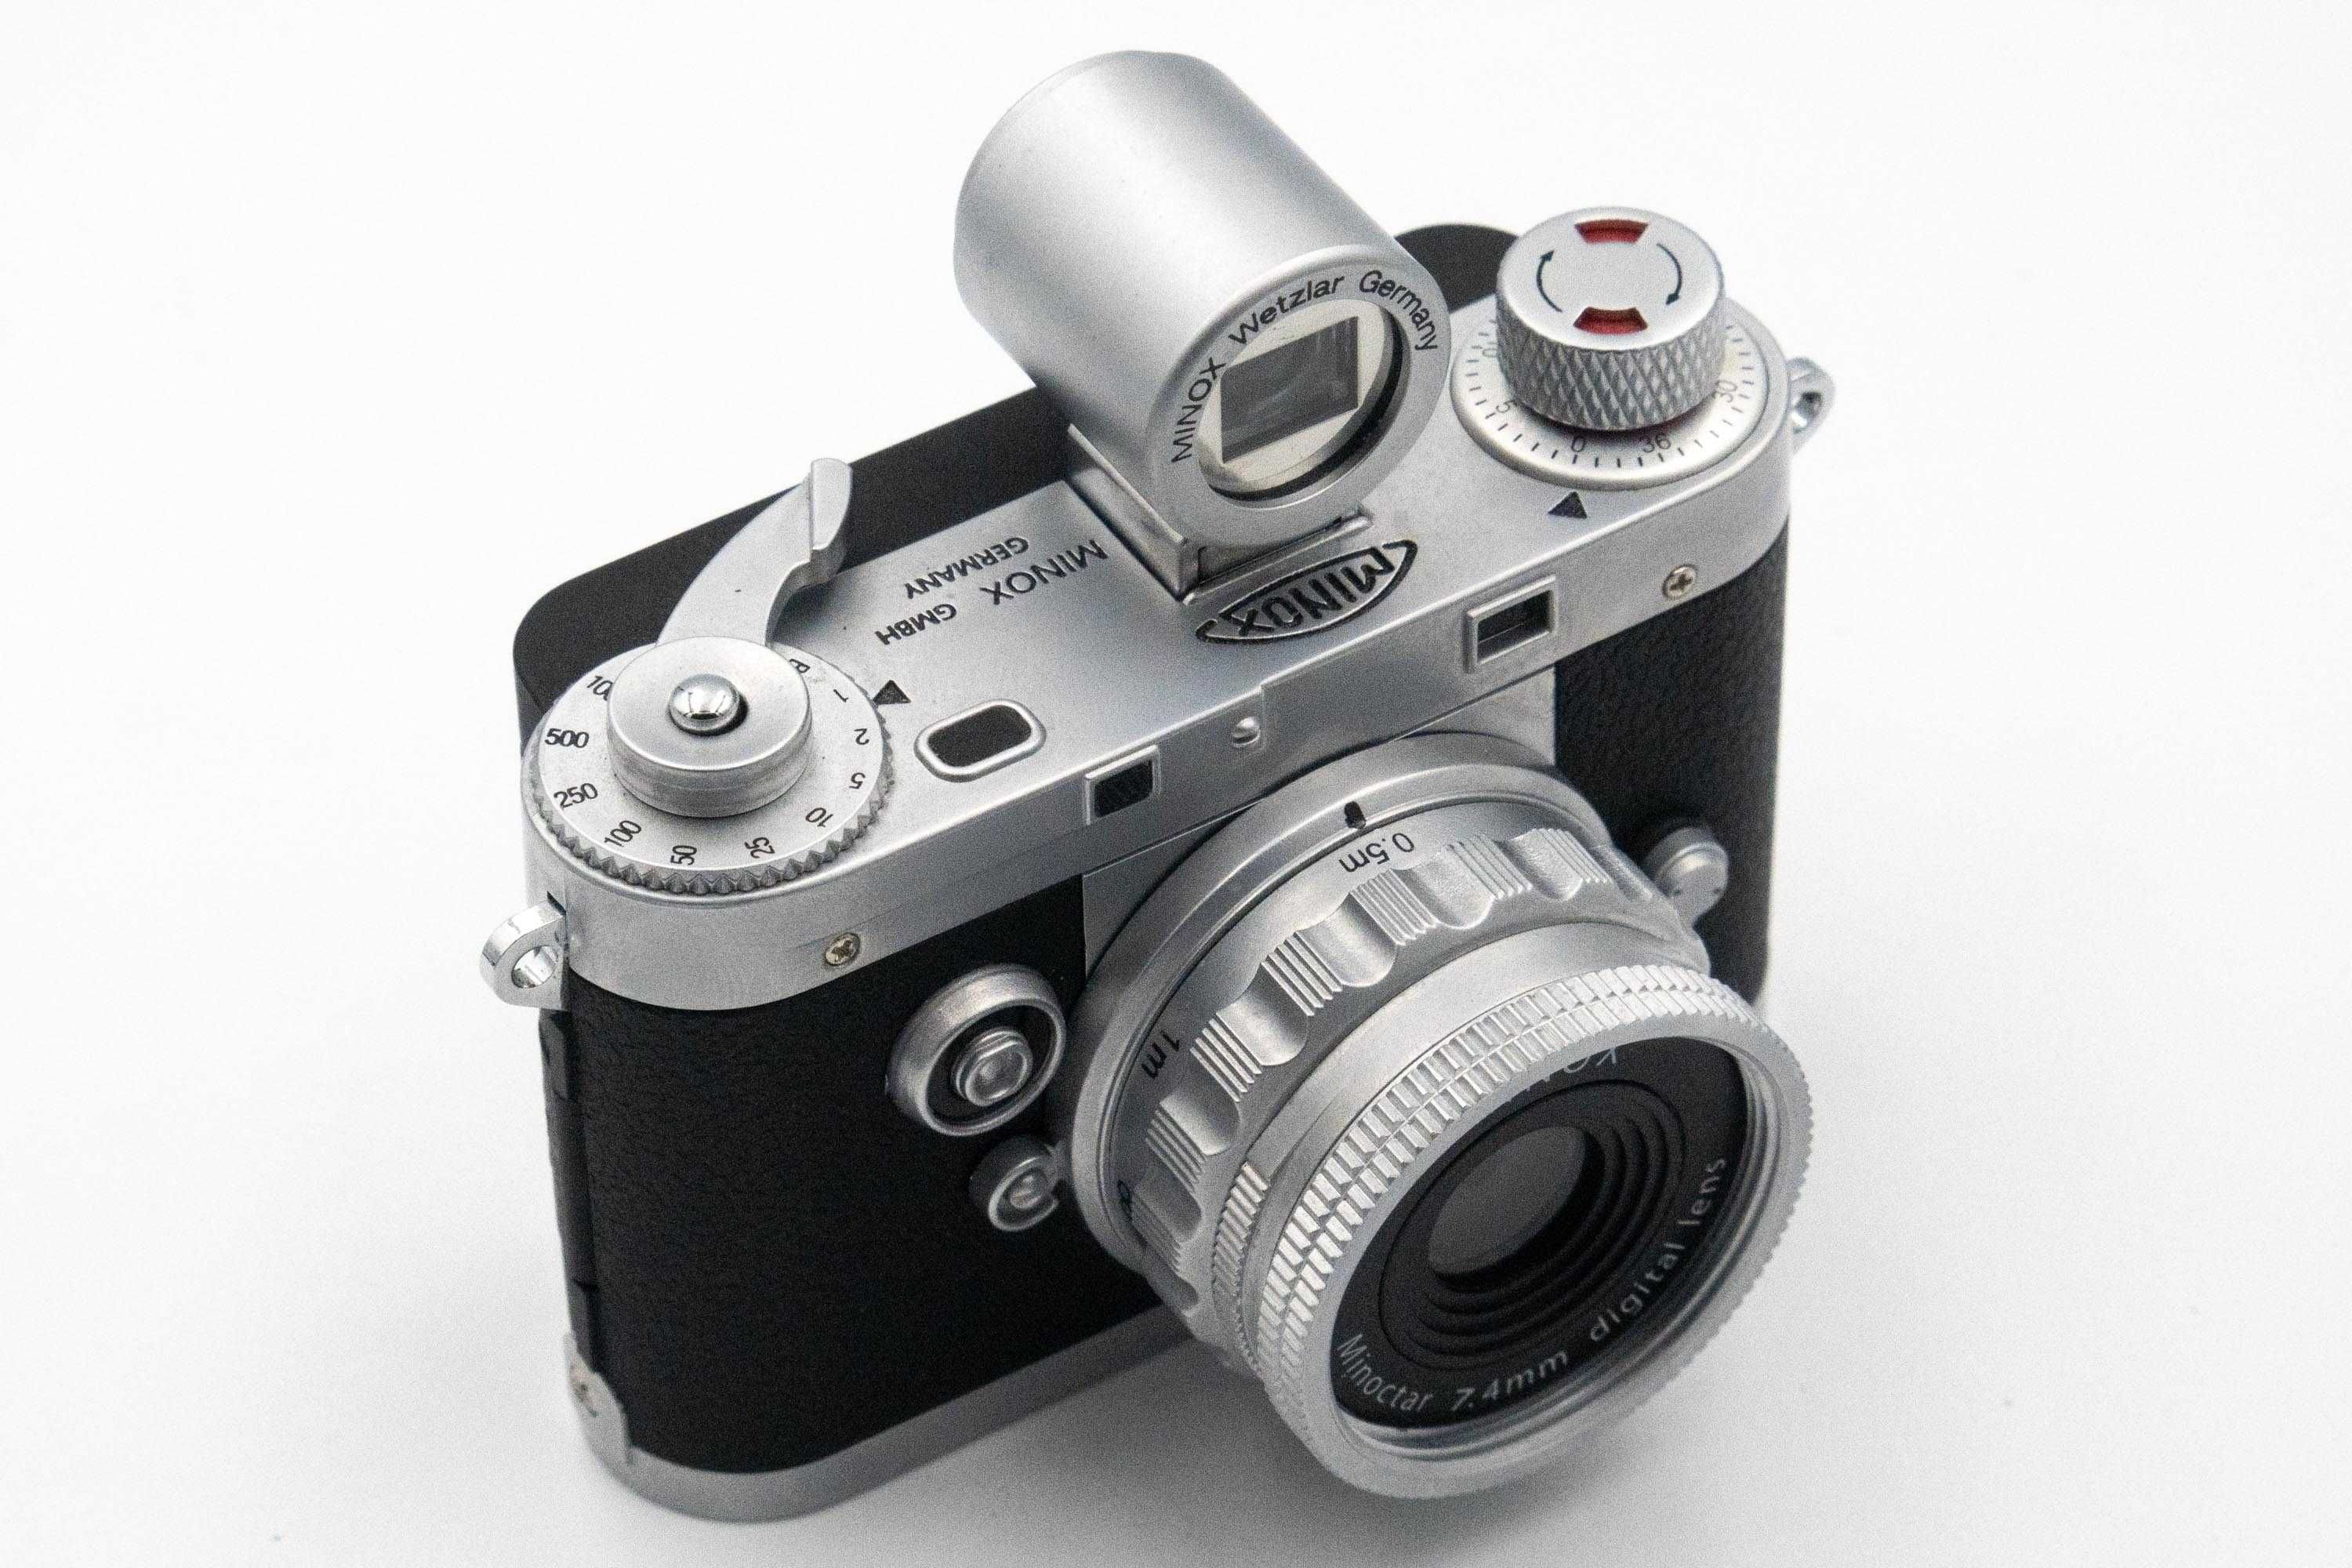 Aparat foto de colectie Minox DC  14.0 Classic Camera, point and shoot